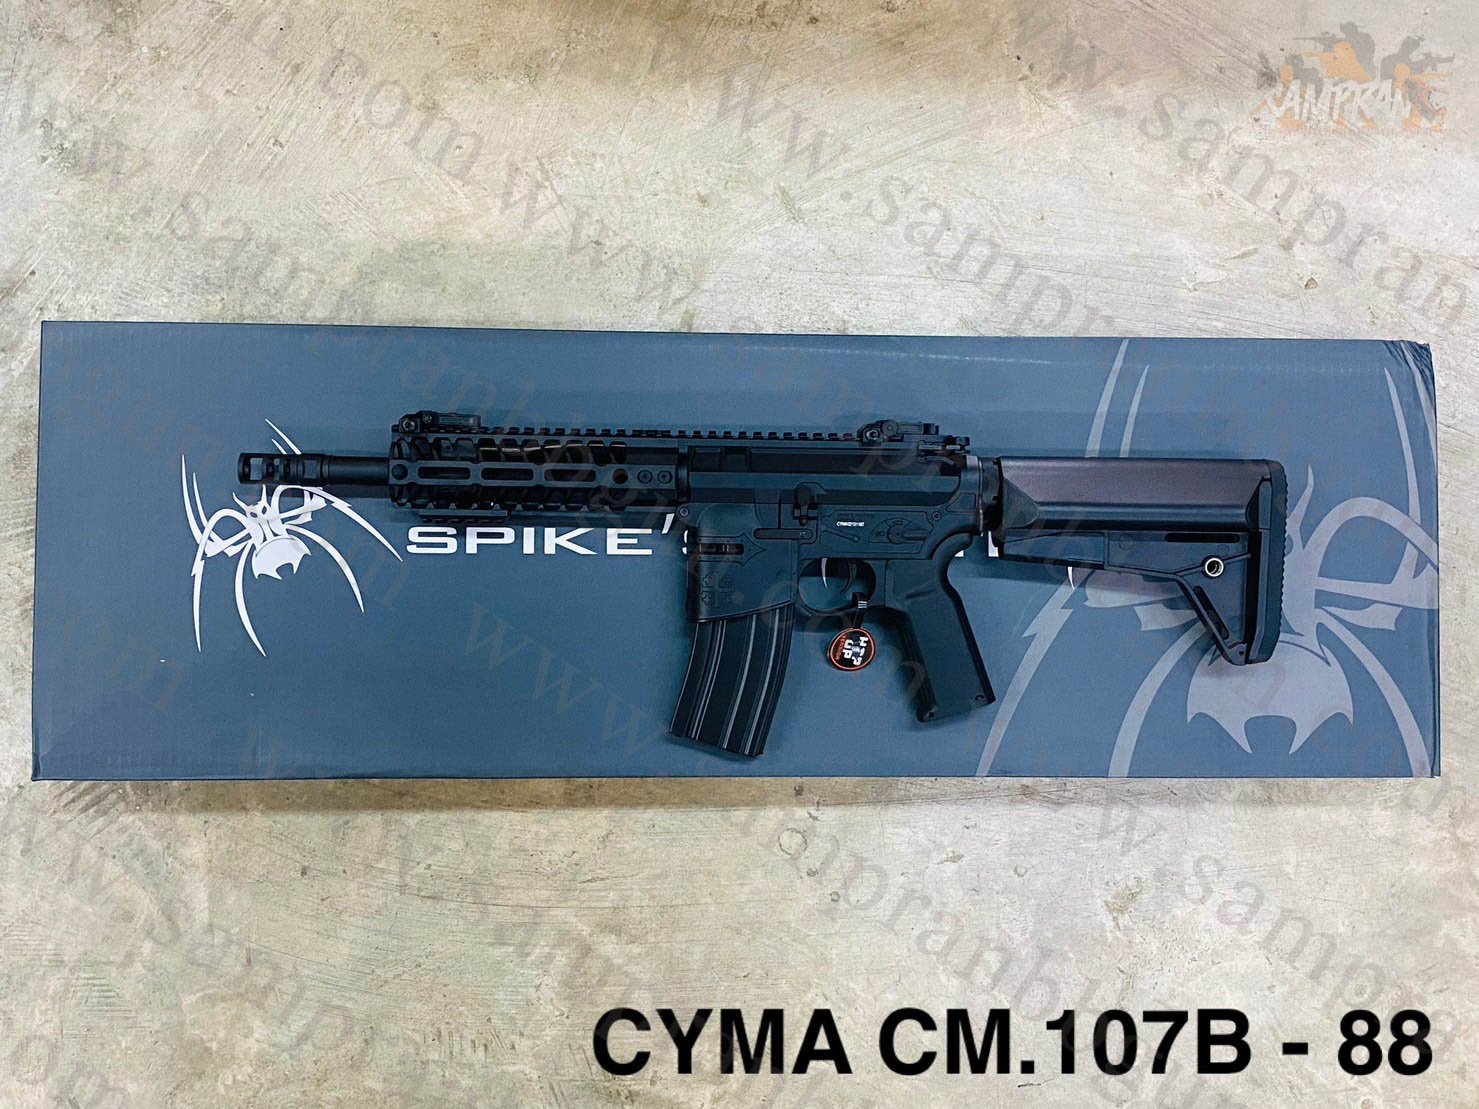 CYMA CM.107B Spike's Rare Breed Crusader PDW - EMG Arms